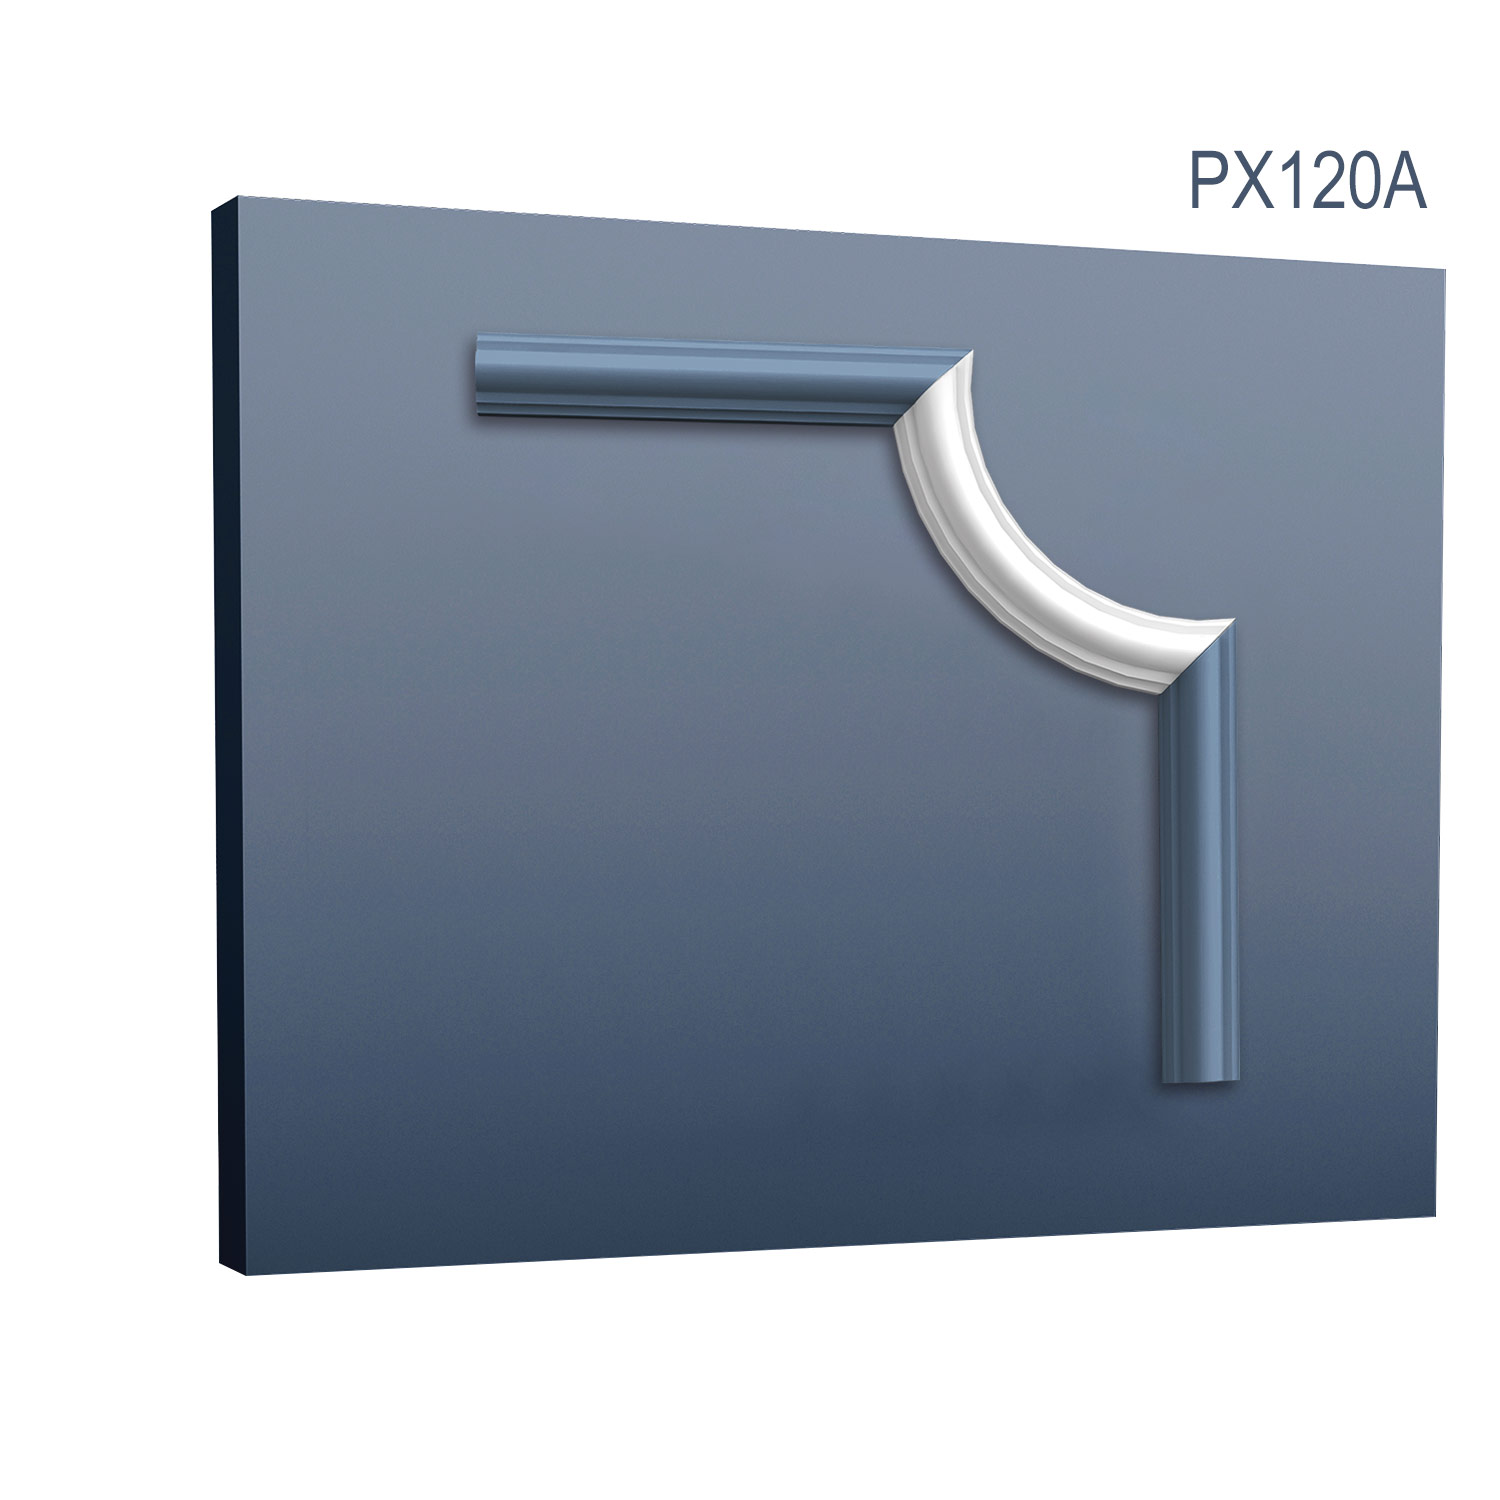 Coltar Pentru Px120 Axxent PX120A, Dimensiuni: 19 X 5.7 X 1.9 cm, Orac Decor Orac Decor